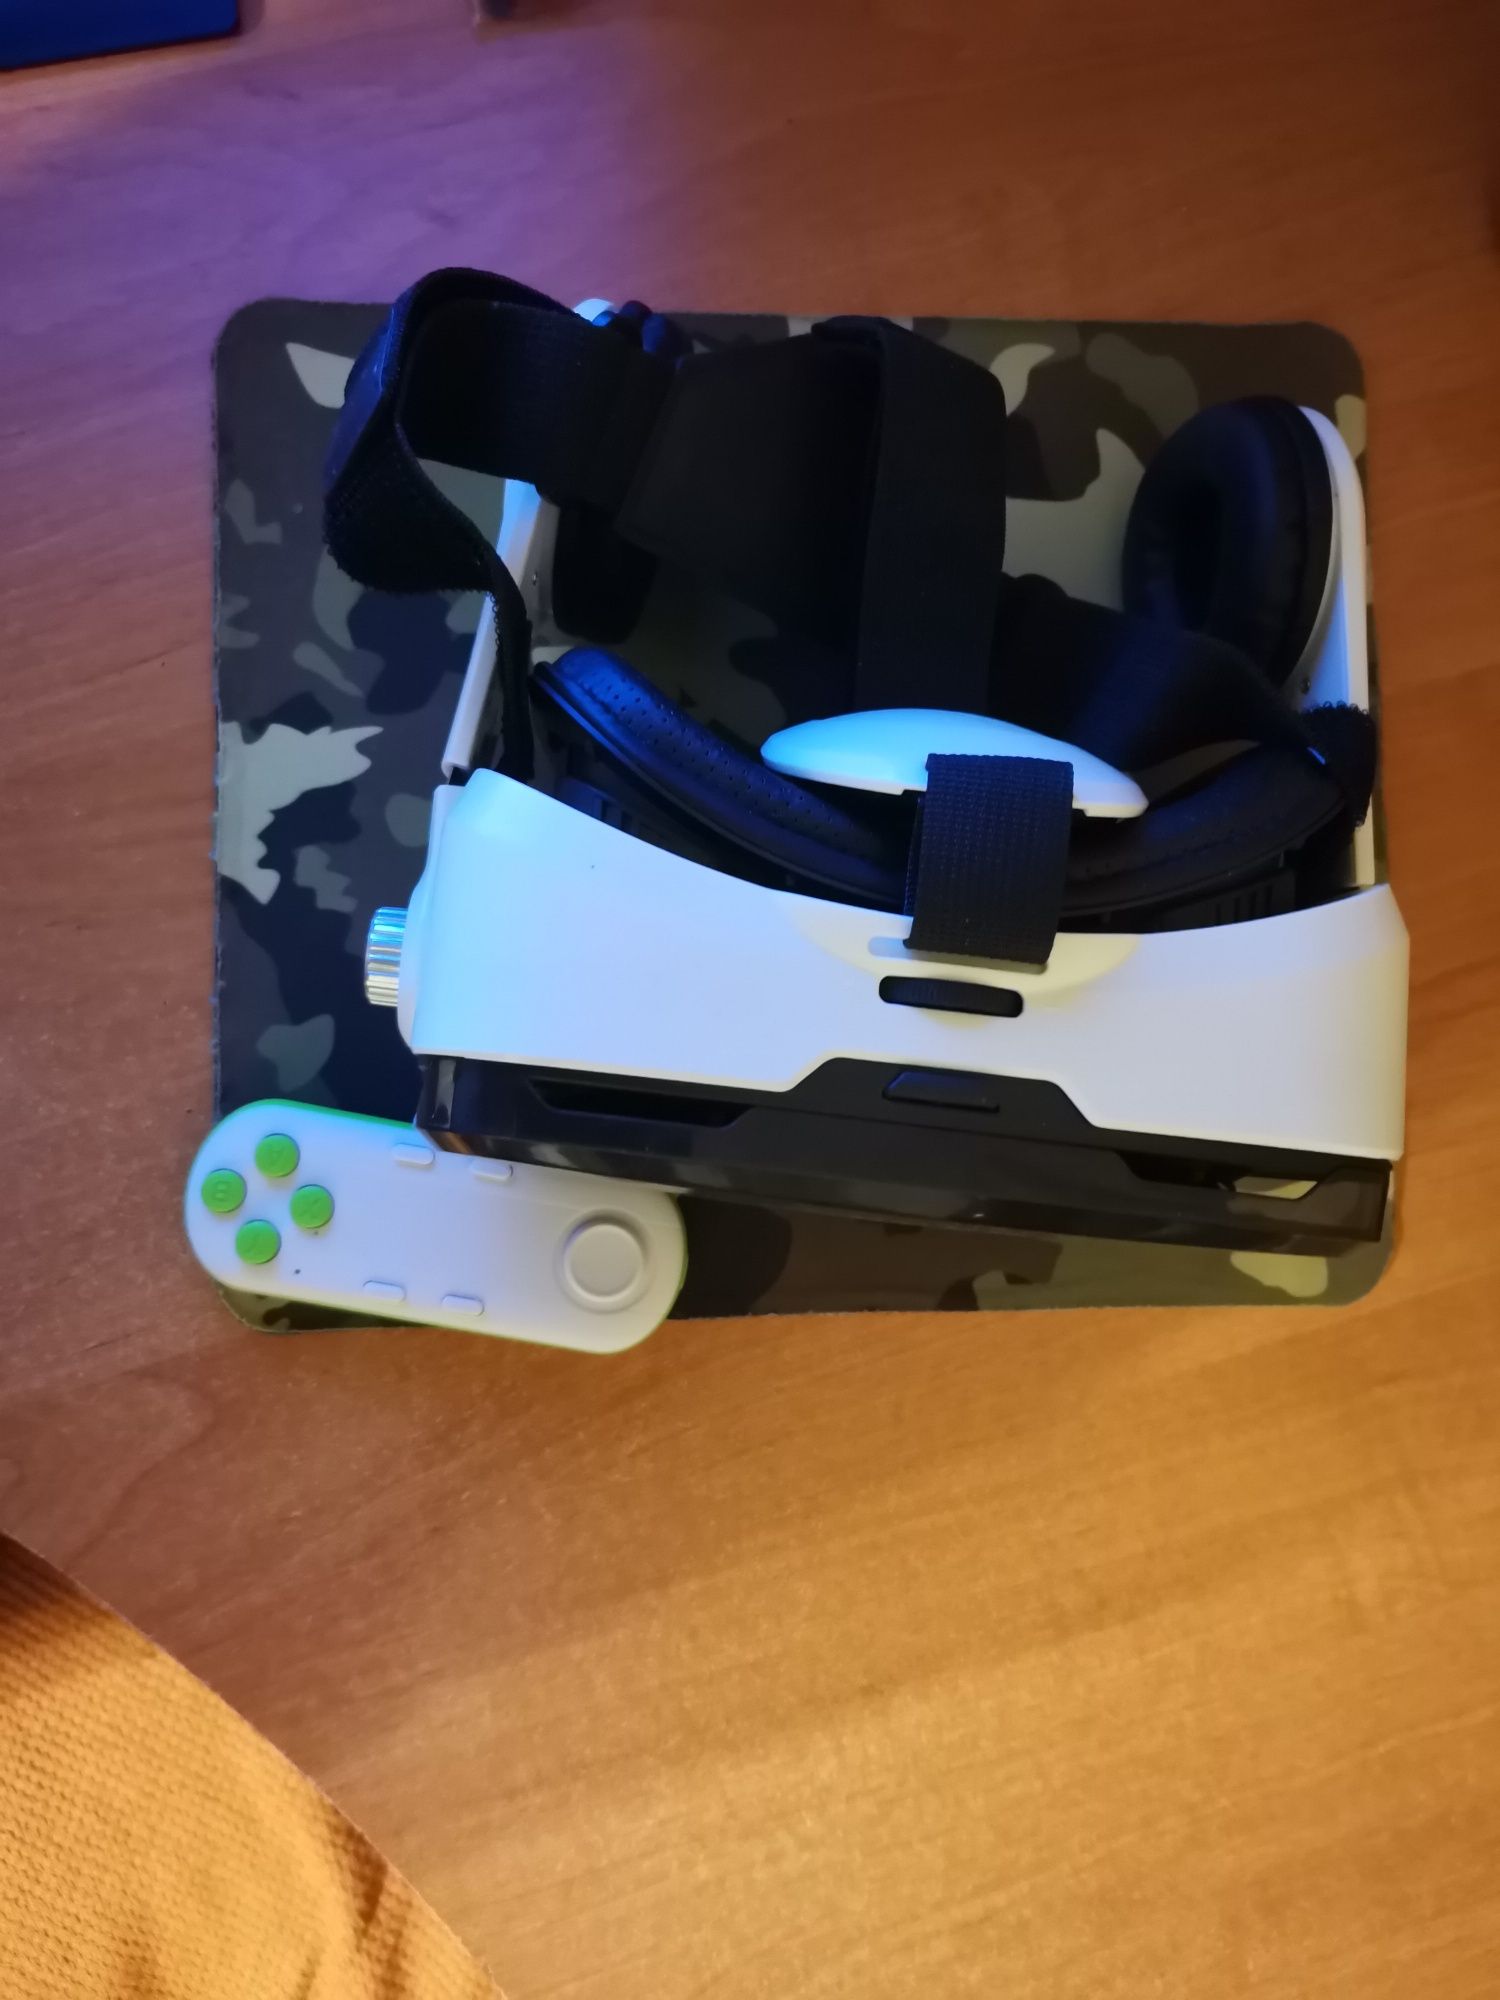 Очки виртуальной реальности Bobo VR Z4